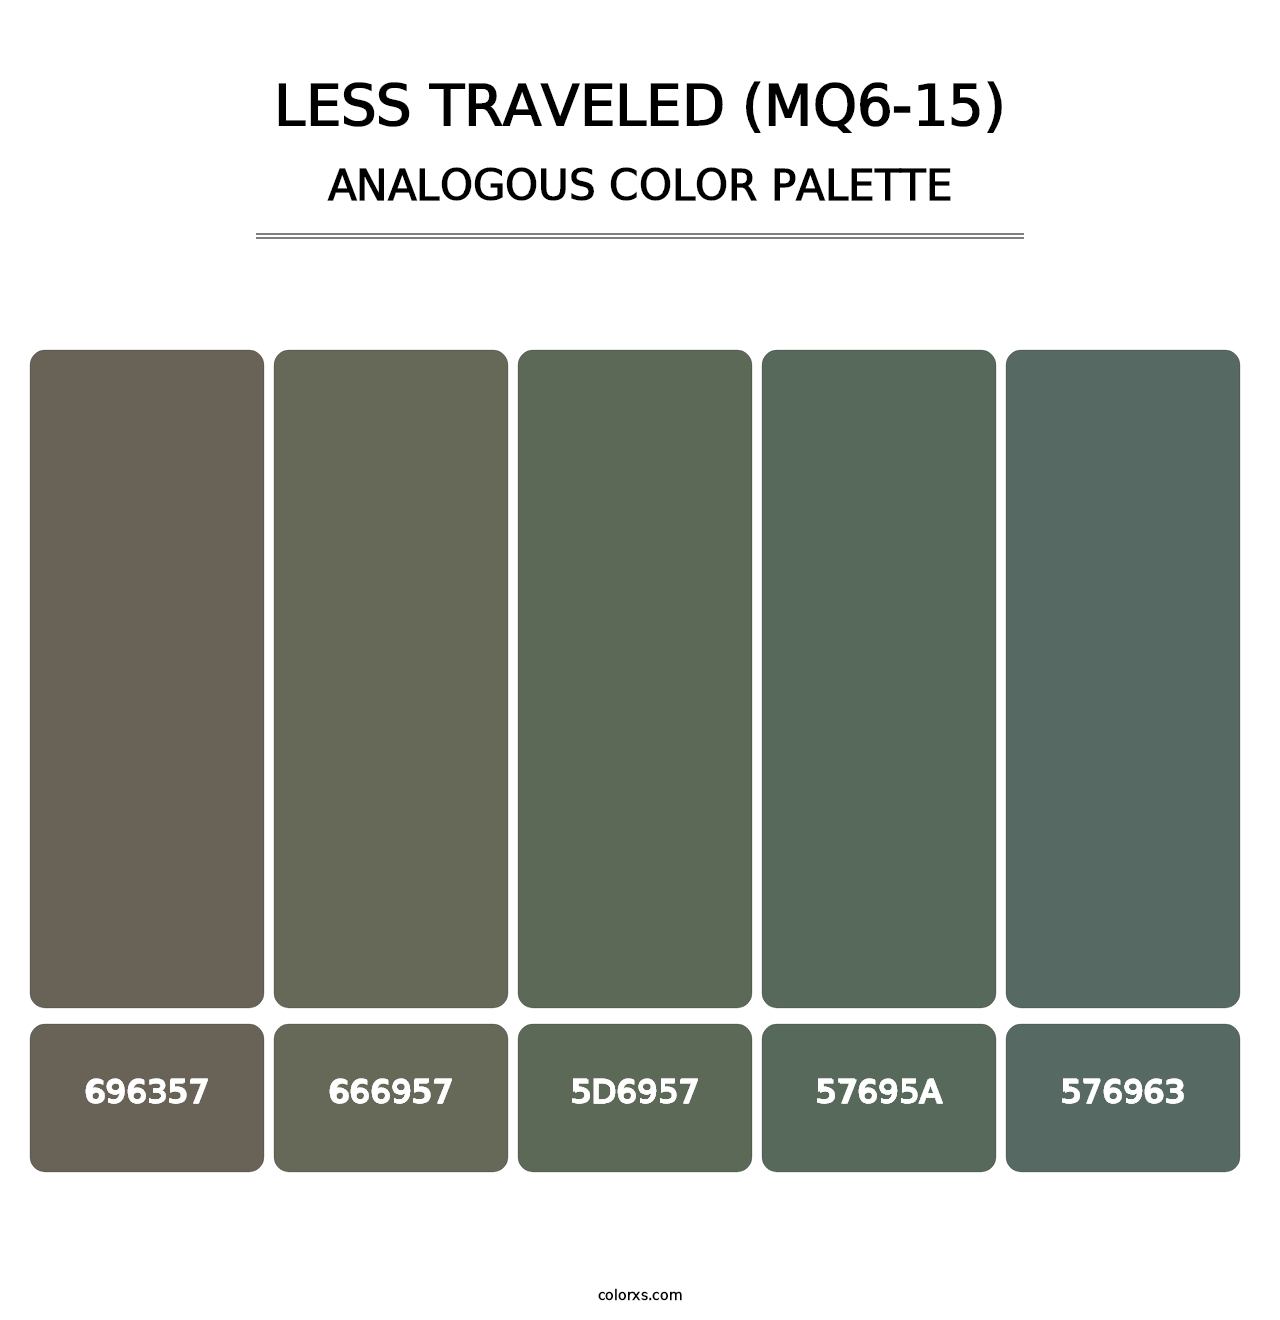 Less Traveled (MQ6-15) - Analogous Color Palette